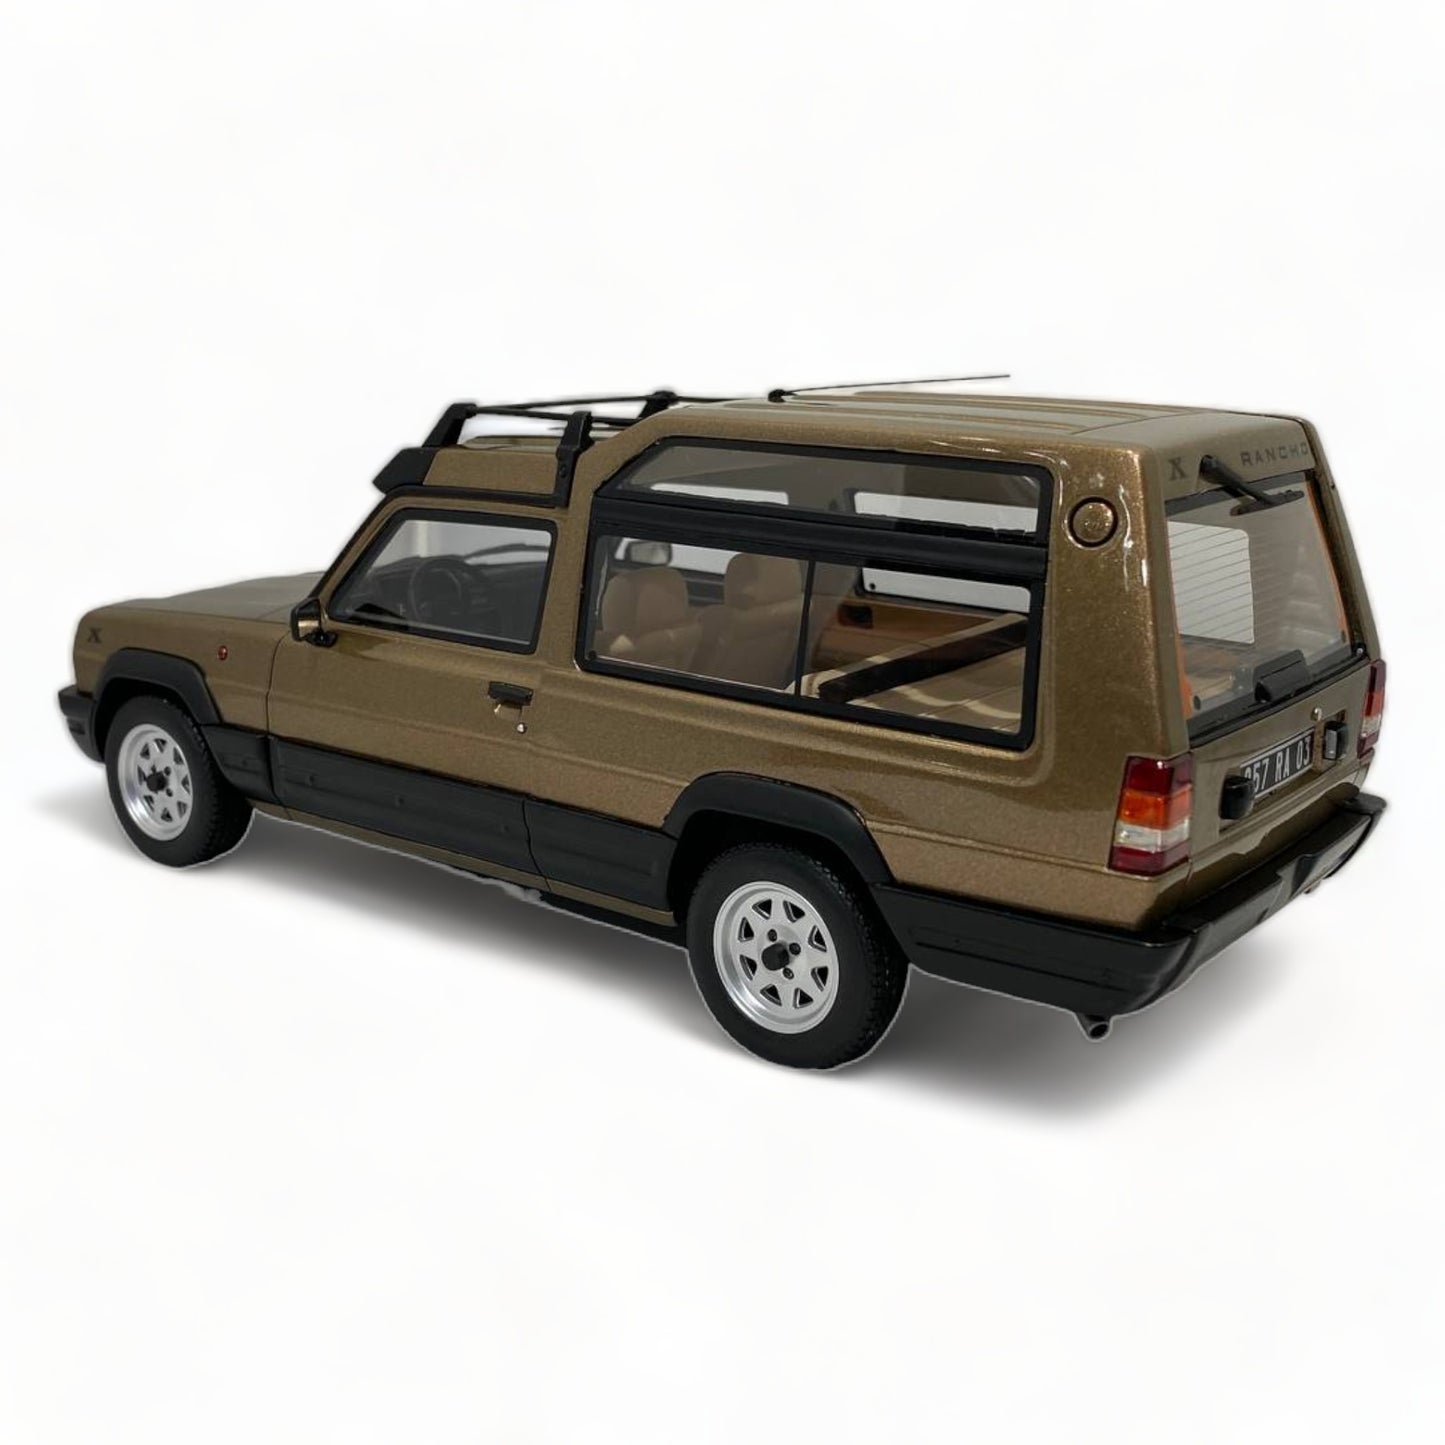 1/18 Resin OTTO Talbot Matra Rancho X - Brown Miniature Car|Sold in Dturman.com Dubai UAE.